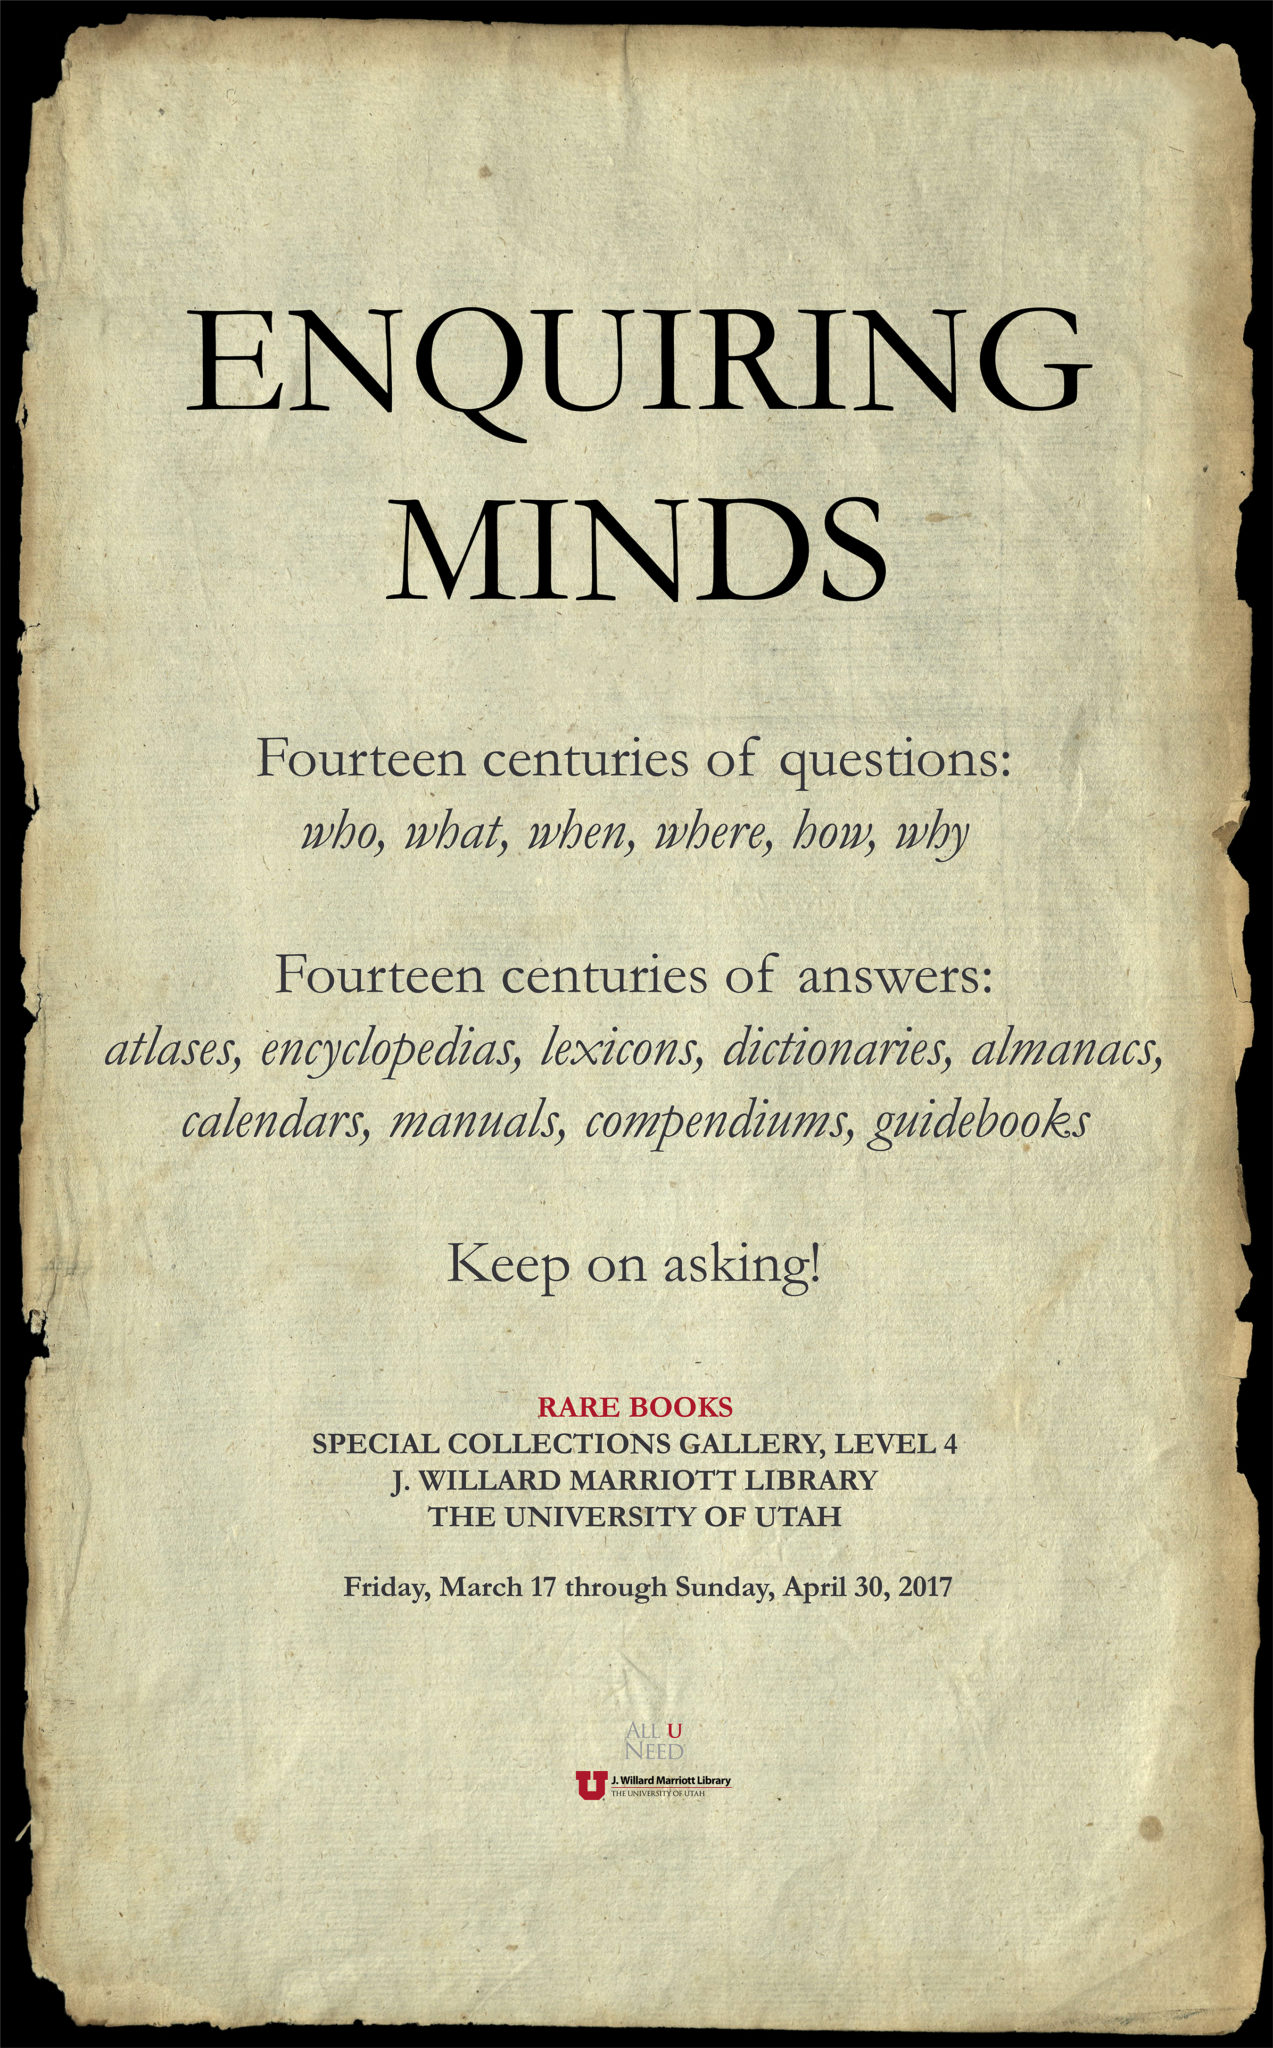 Enquiring Minds Exhibition Poster